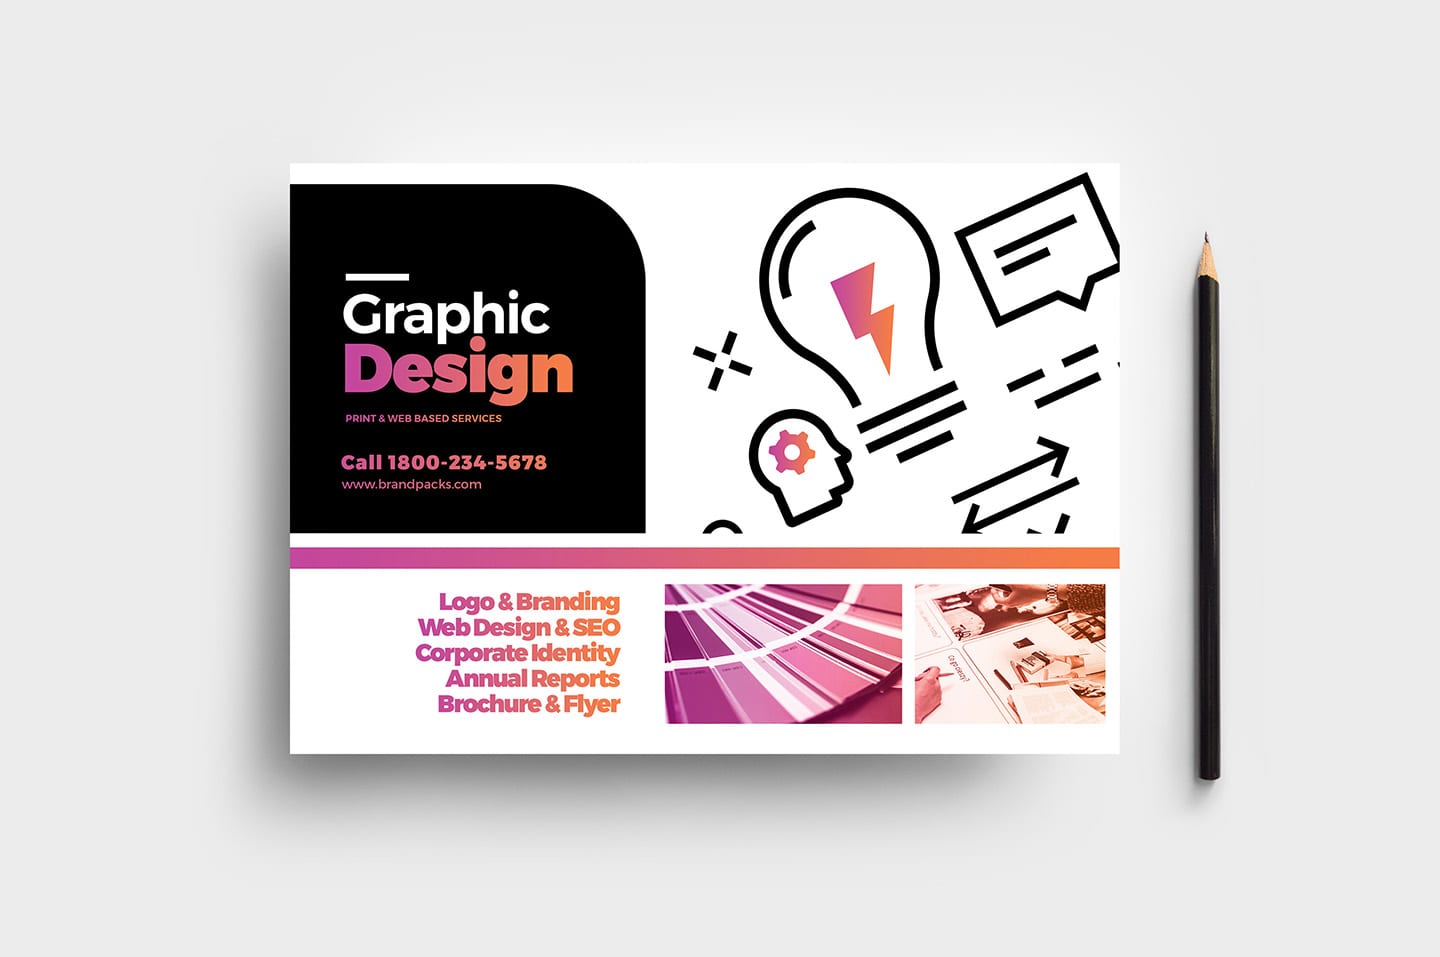 Graphic Design Agency Flyer Template for Photoshop & Illustrator Regarding Graphic Design Flyer Templates Free